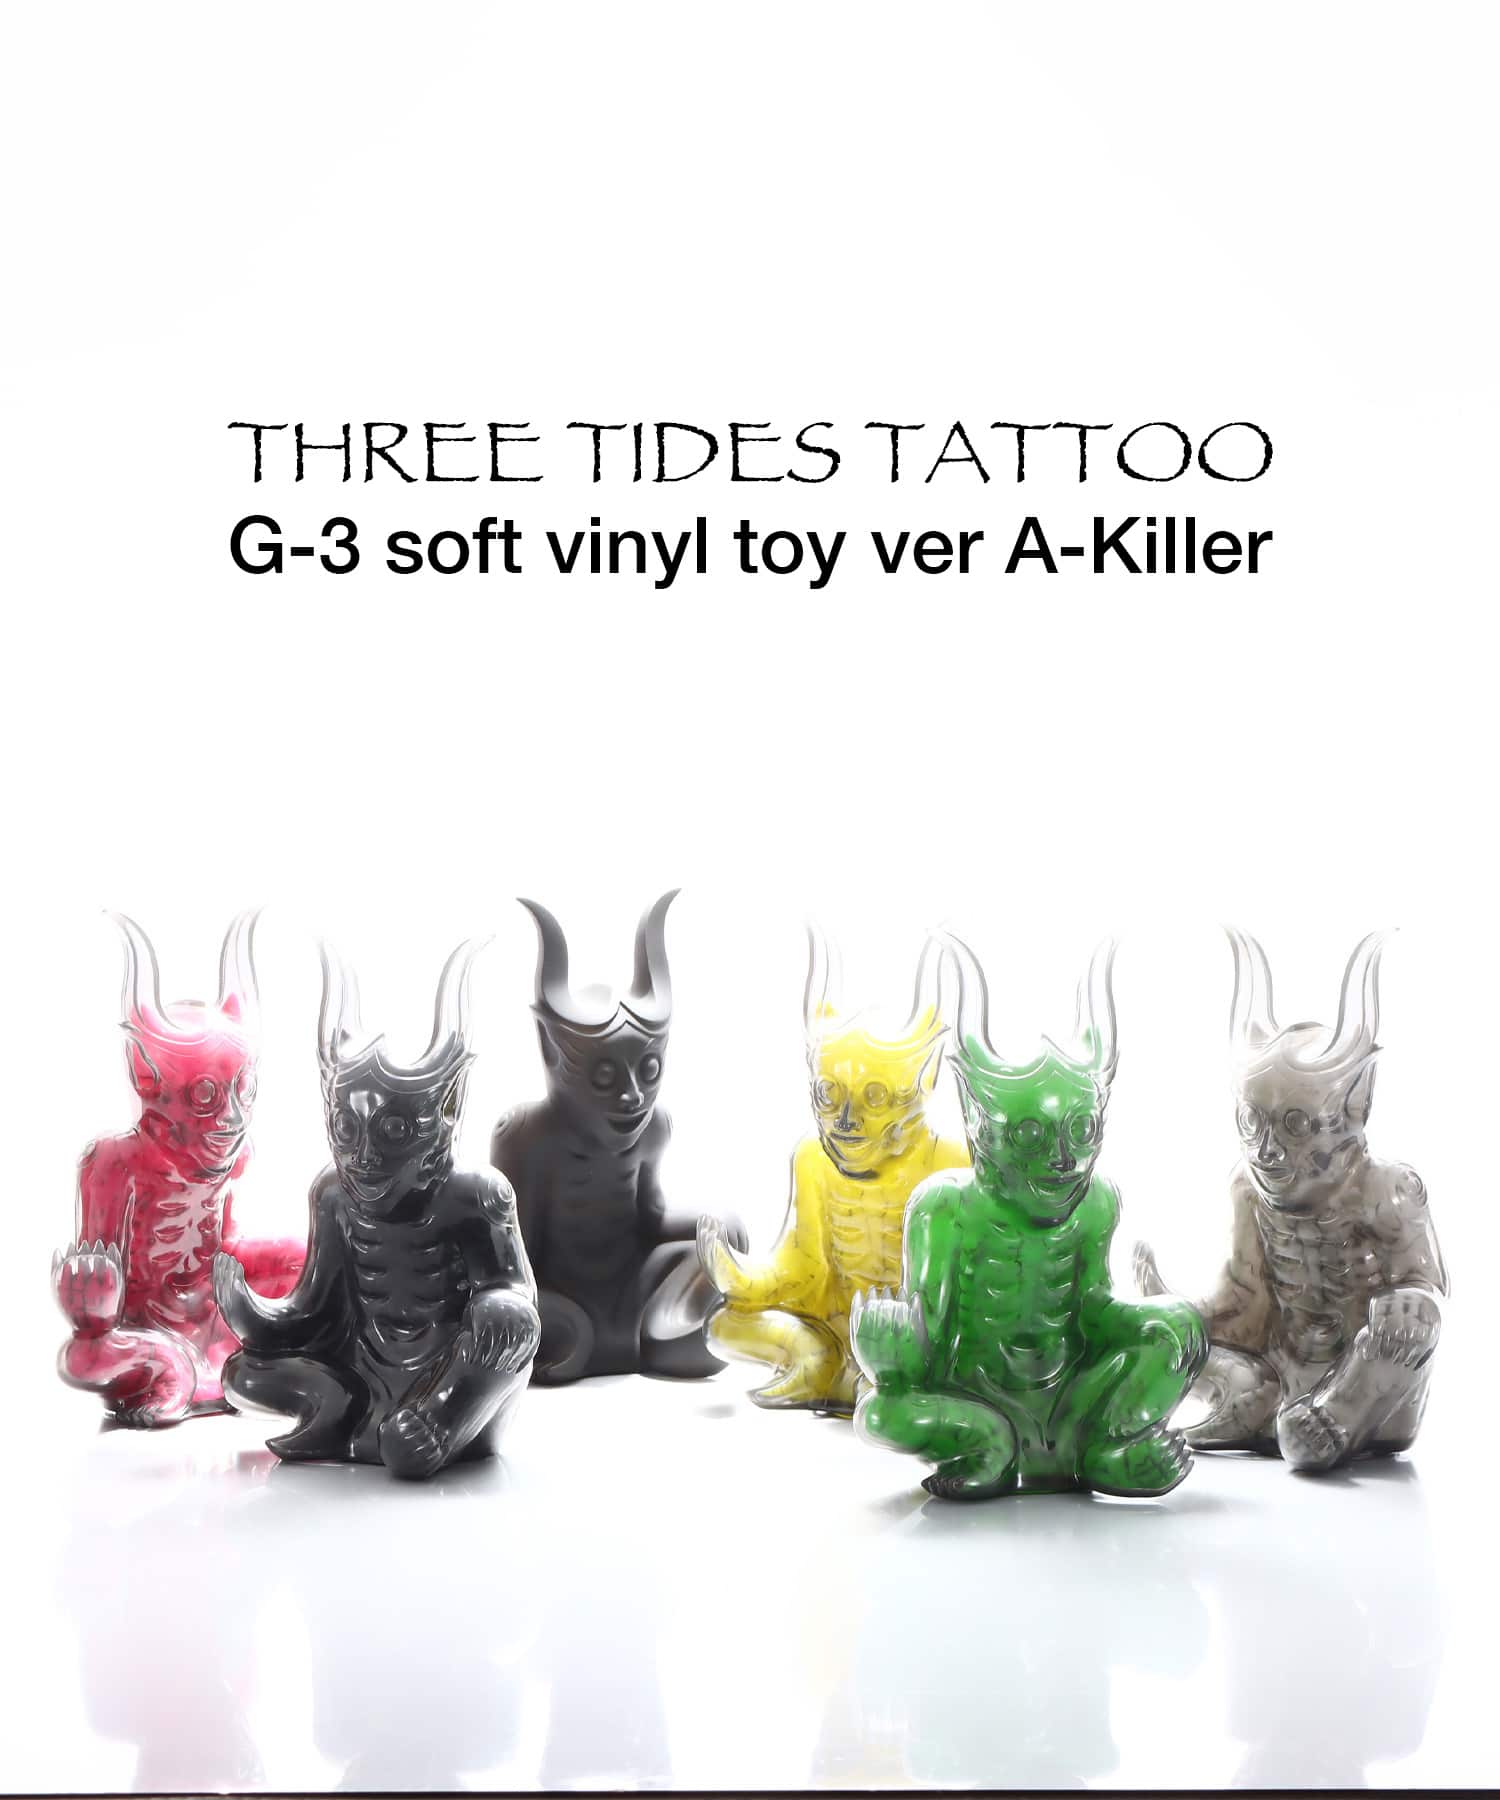 THREE TIDES TATTOO G-3 soft vinyl toy ver A-Killer